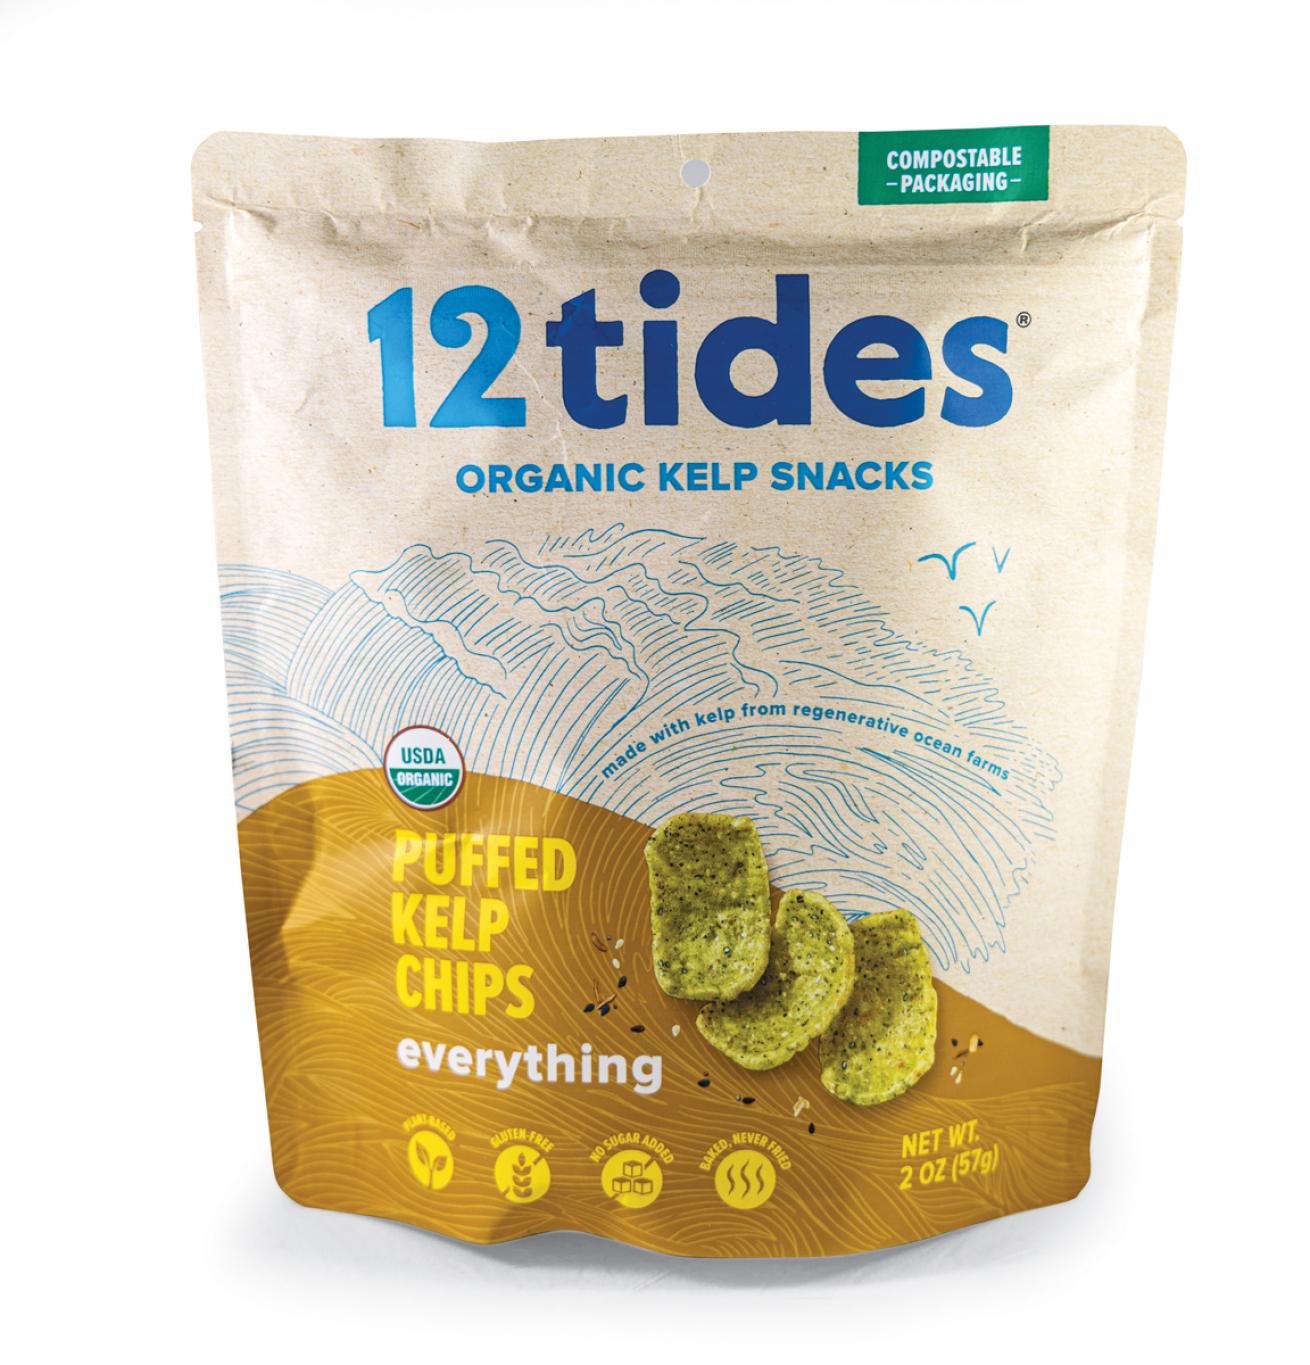 image of 12 tides organic kelp snacks